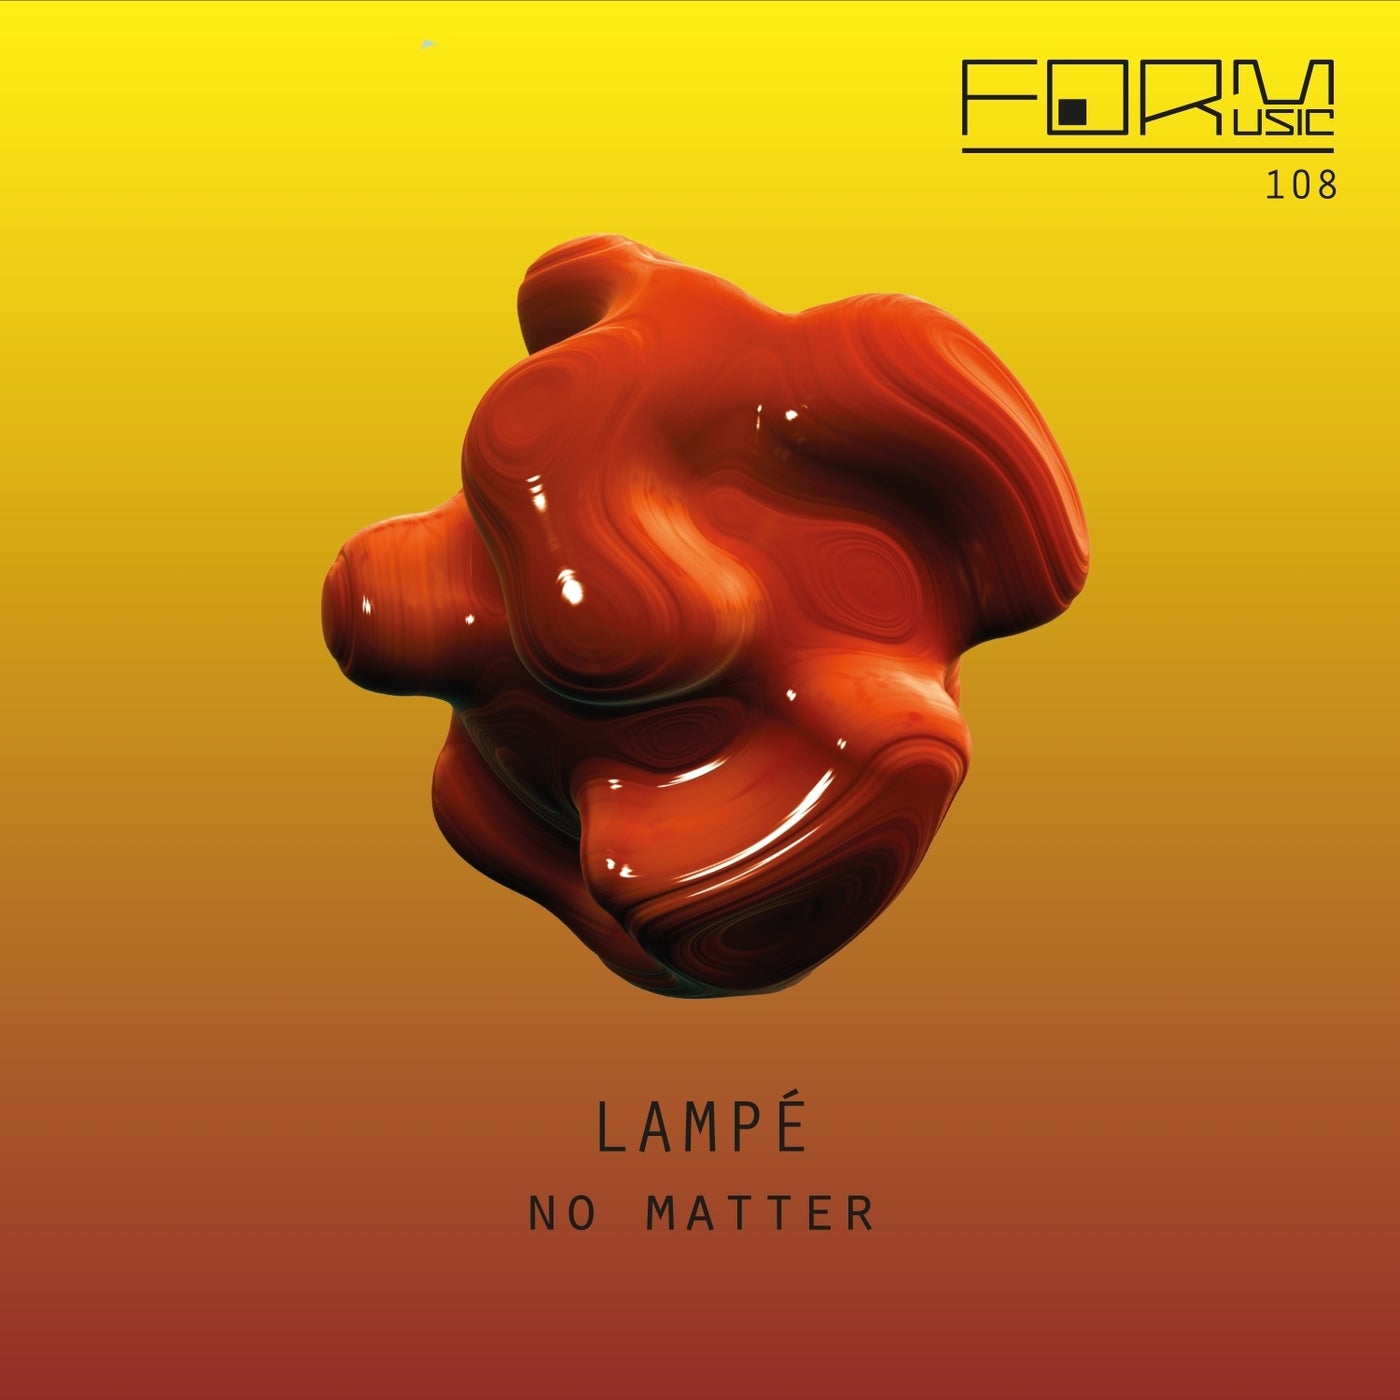 Lampe - No Matter (Original Mix)